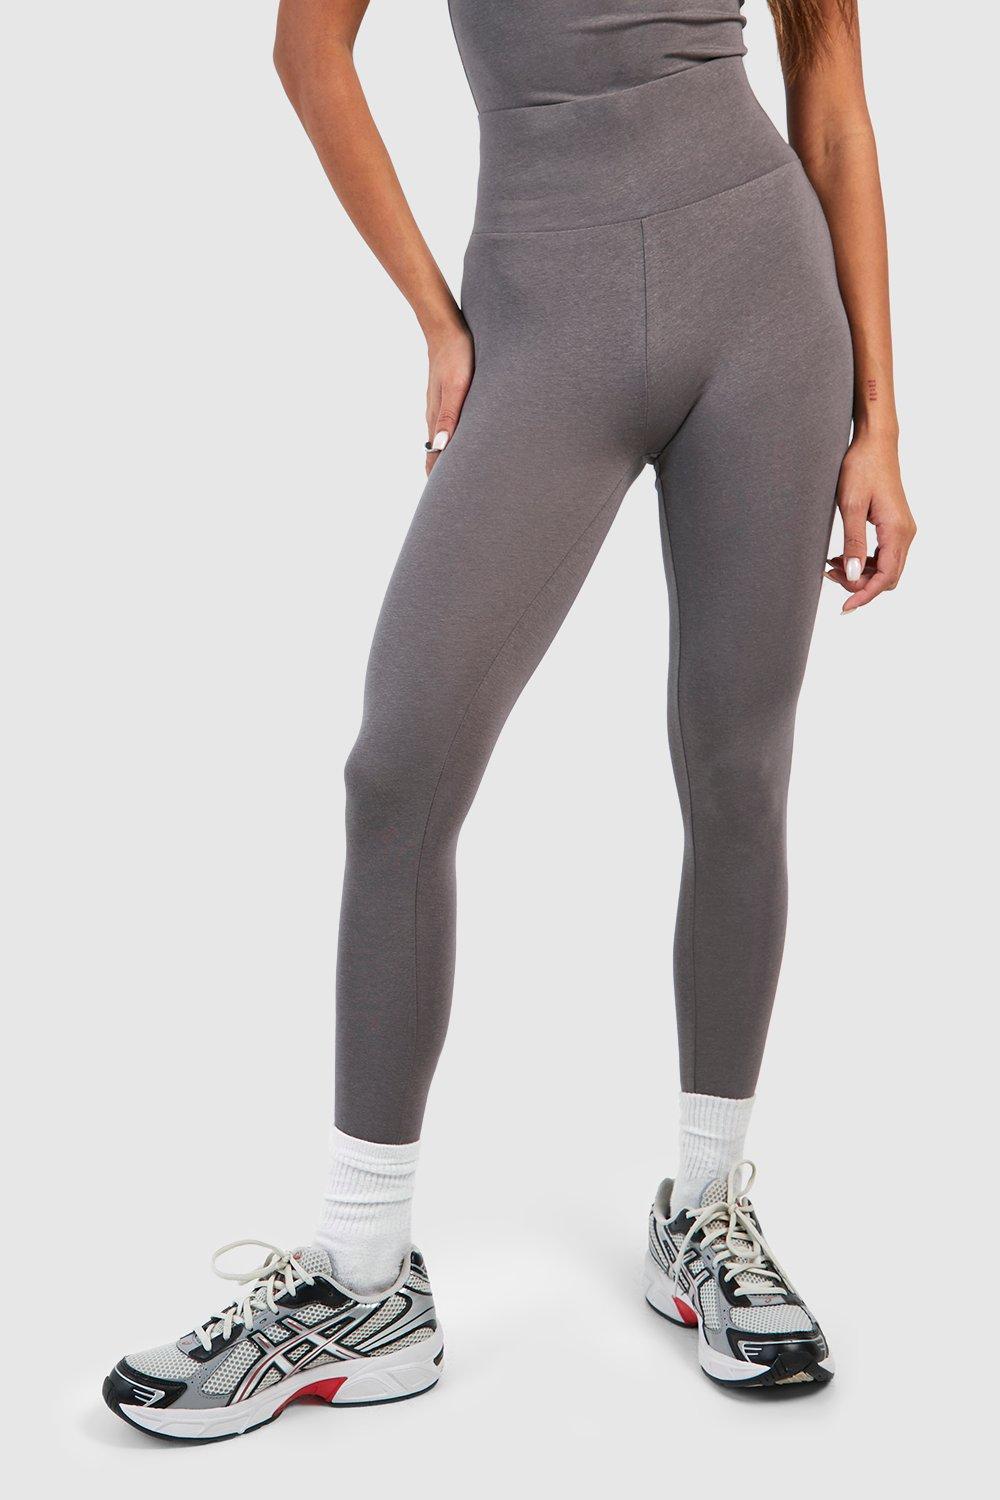 Plaid Leggings Women Sexy Pants Fitness Leggins Gym Sporting Plus Size High  Waist Trousers Good Elasticity (Color : Khaki White Plaid, Size : XL.) :  : Clothing, Shoes & Accessories